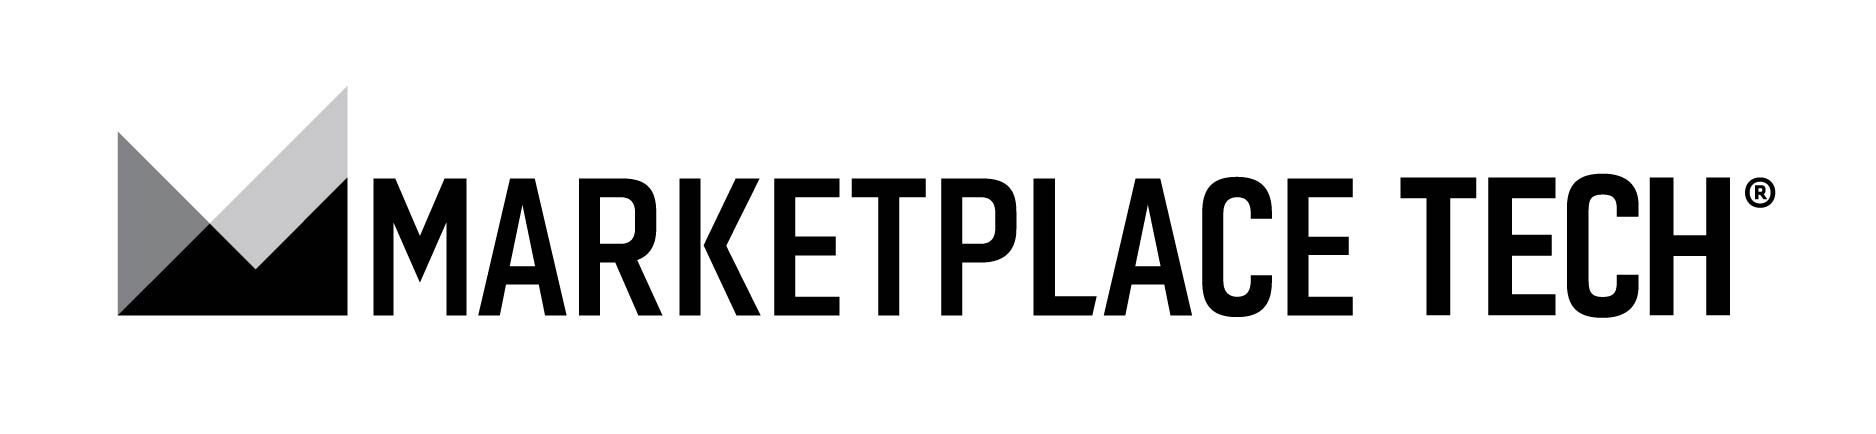 Marketplace Tech Report Logo - 2